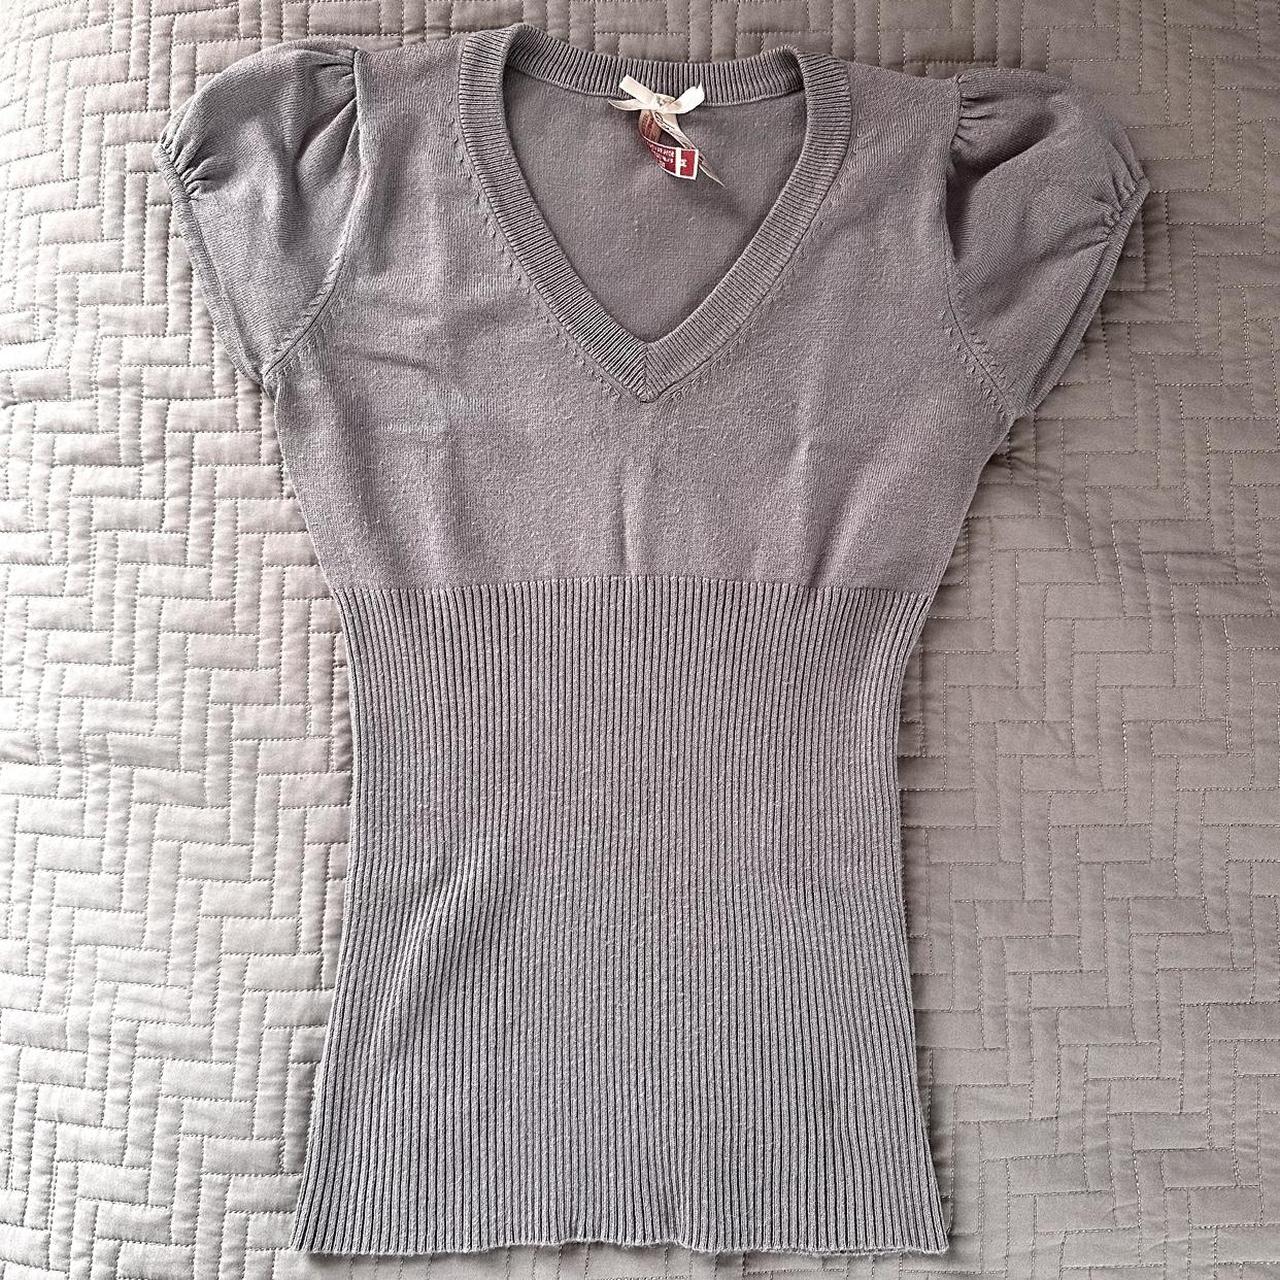 Short Sleeve Knit Top 🐚 Light purple-grayish... - Depop